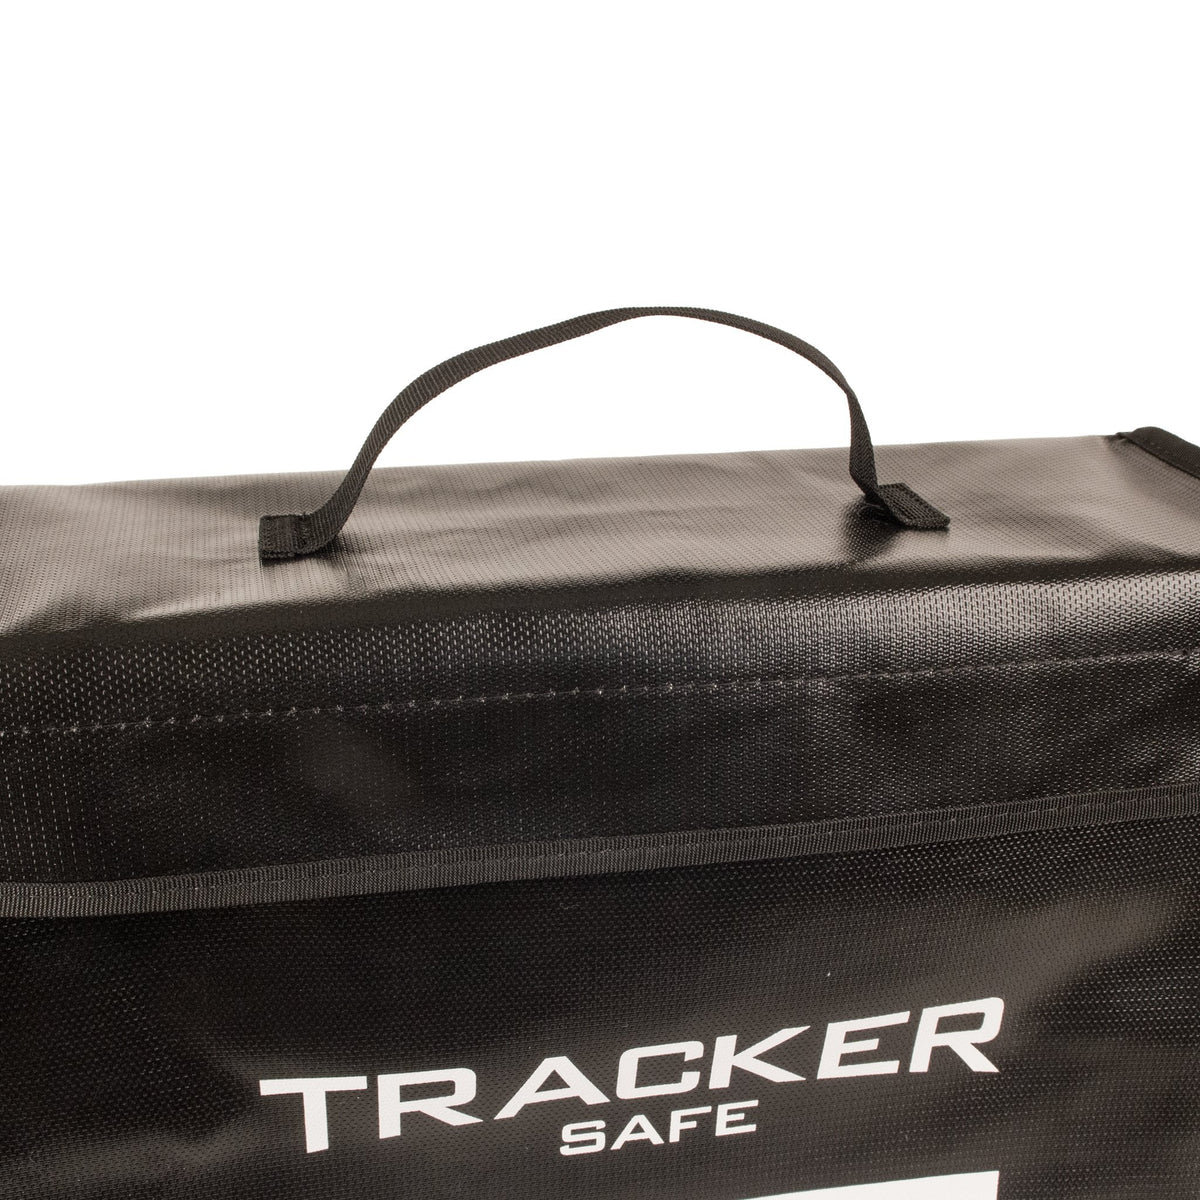 Tracker FB1612 Extra Large Fire &amp; Water Resistant Bag (12&quot; H x 16&quot; W x 5.00&quot; D)